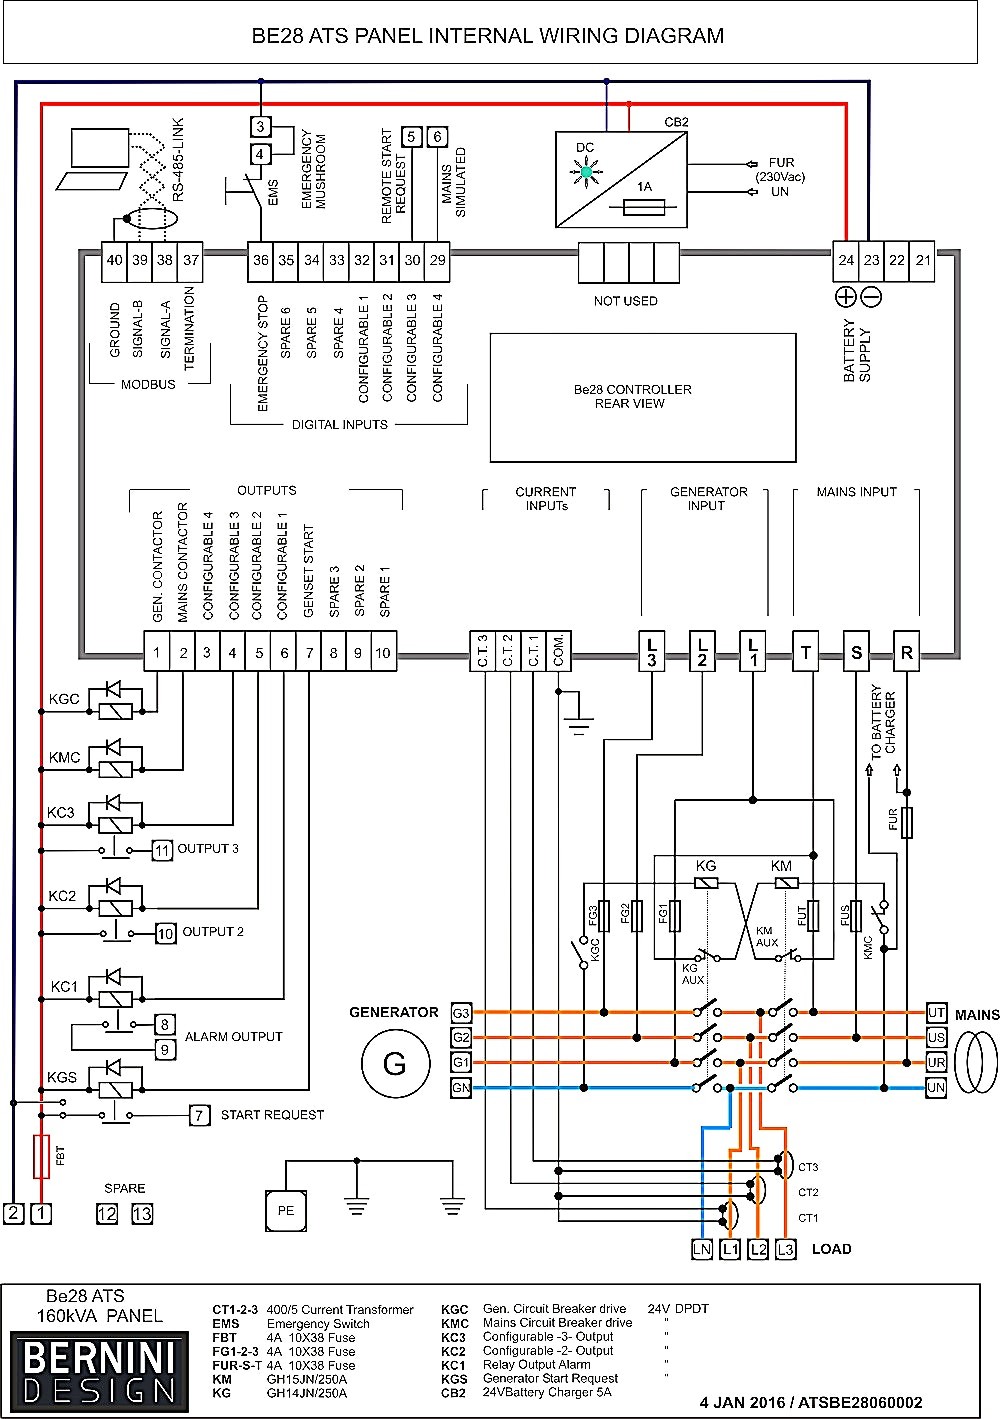 generac ats wiring diagram introduction to electrical wiring rh jillkamil generac manual transfer switch wiring diagram generac 100 and transfer switch